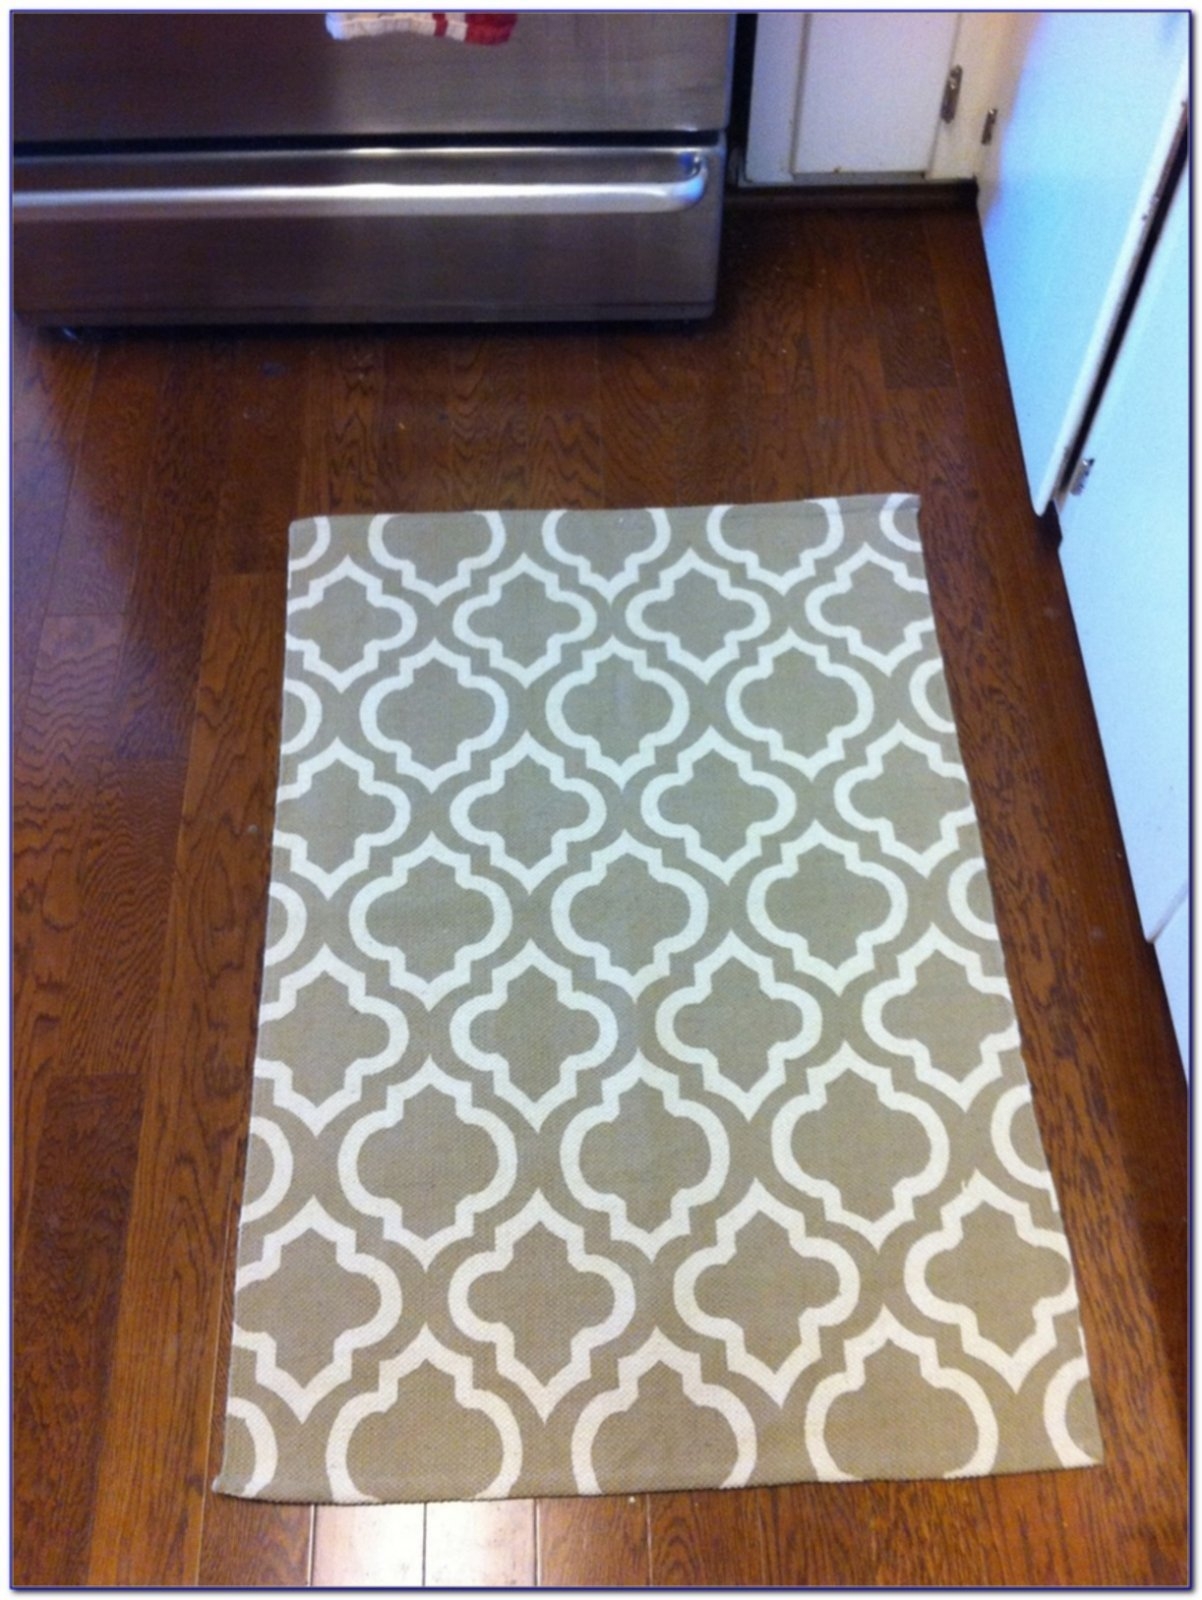 2Pc Non-Slip Kitchen Mat Rubber Backing Doormat Runner Rug Set 40x60cm+40x120cm